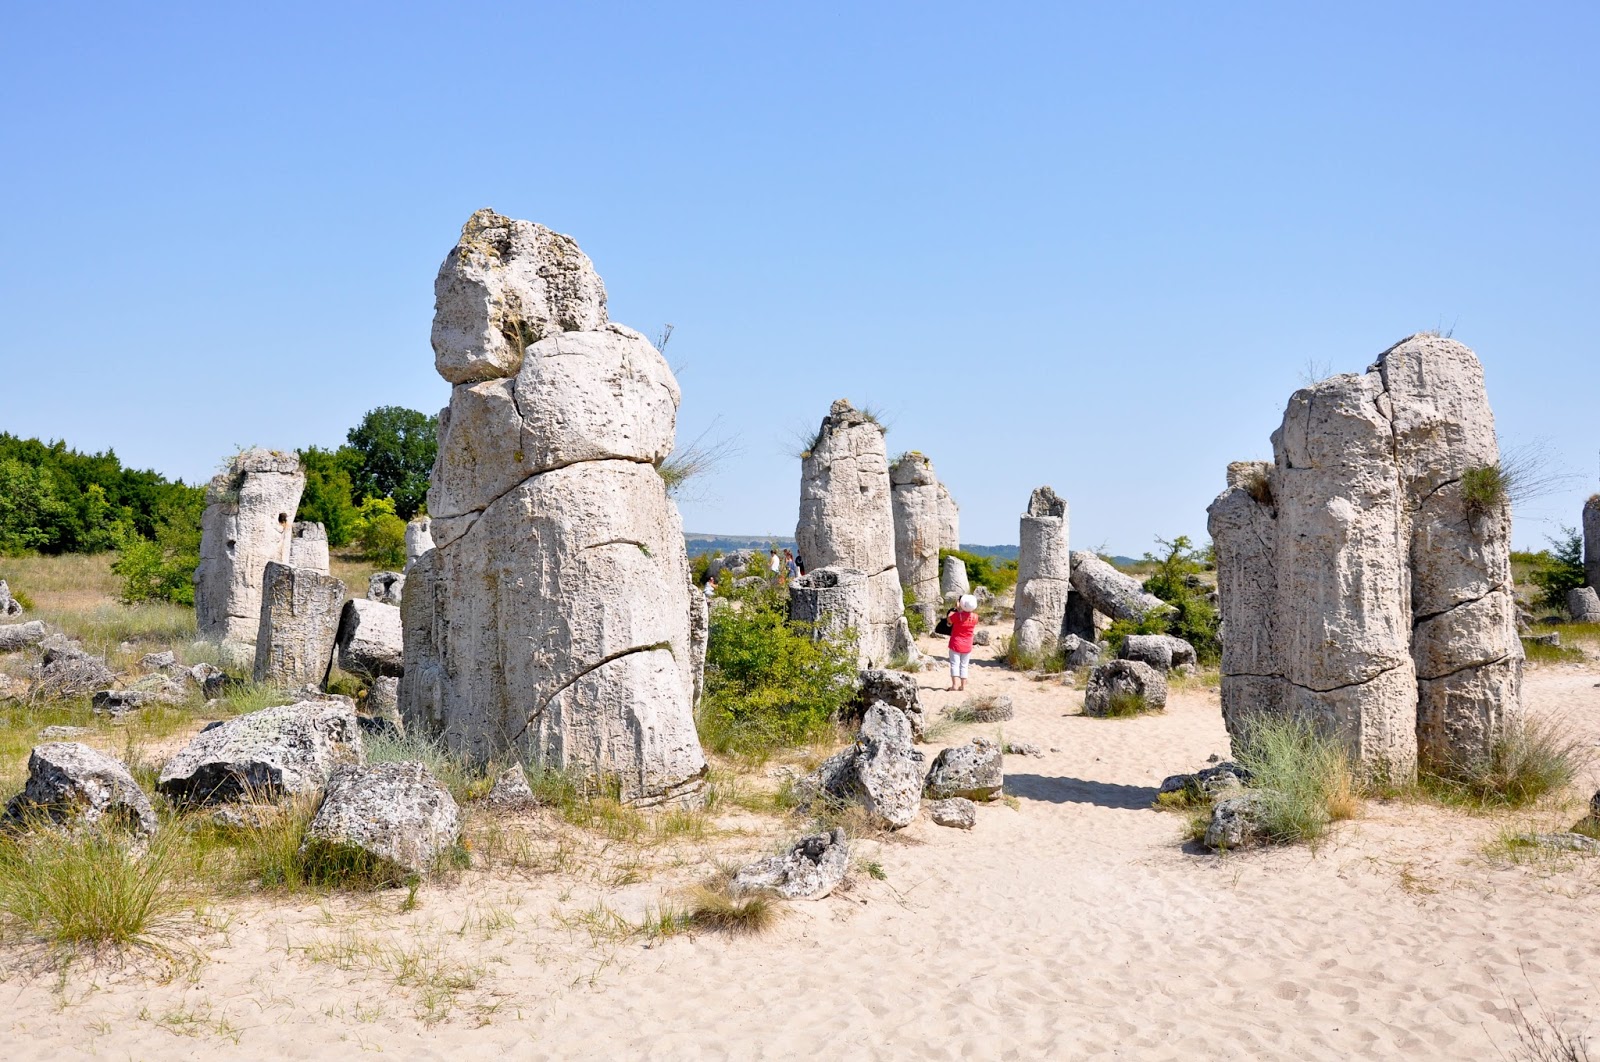 Among the stone pillars, The Stone Forest, Varna, Bulgaria